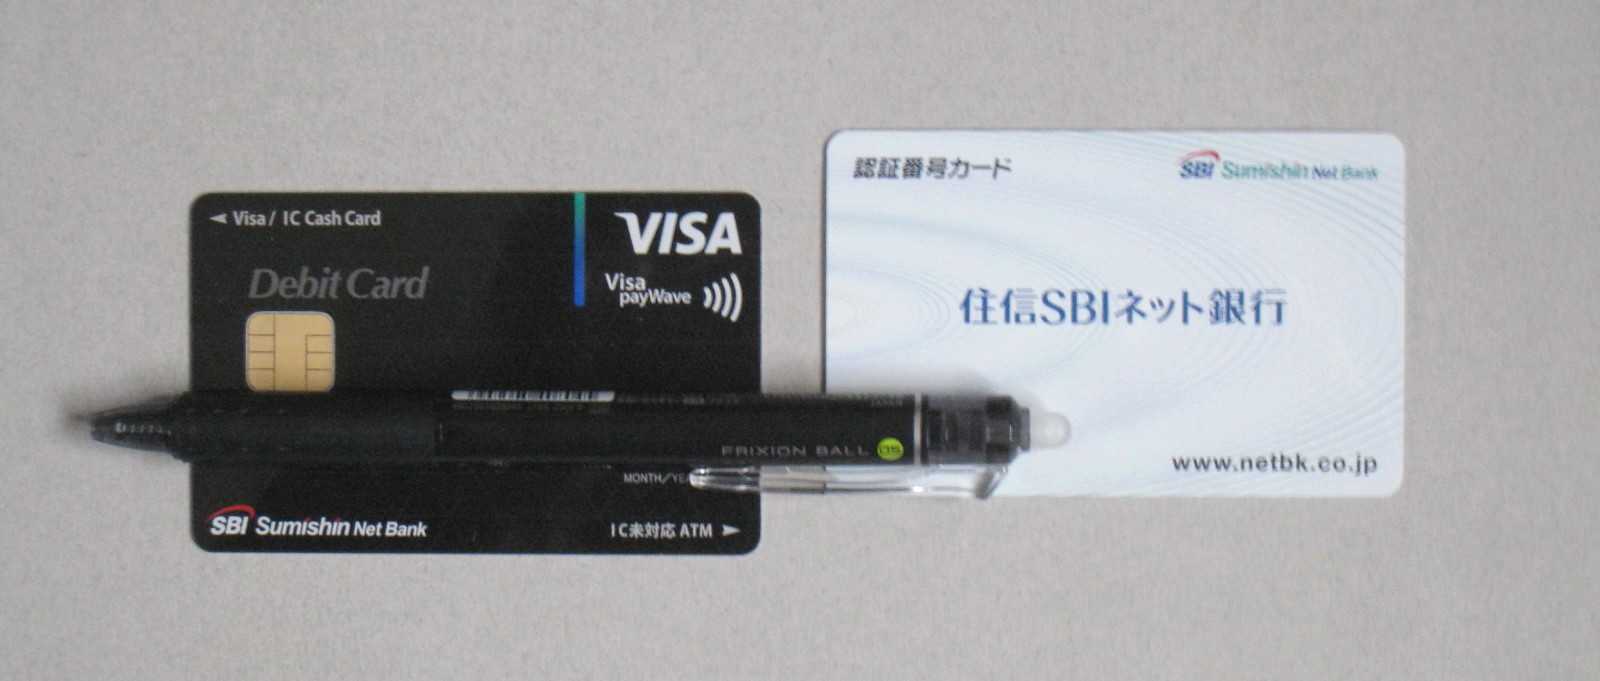 VISAデビット付キャッシュカードと認証番号カードの画像